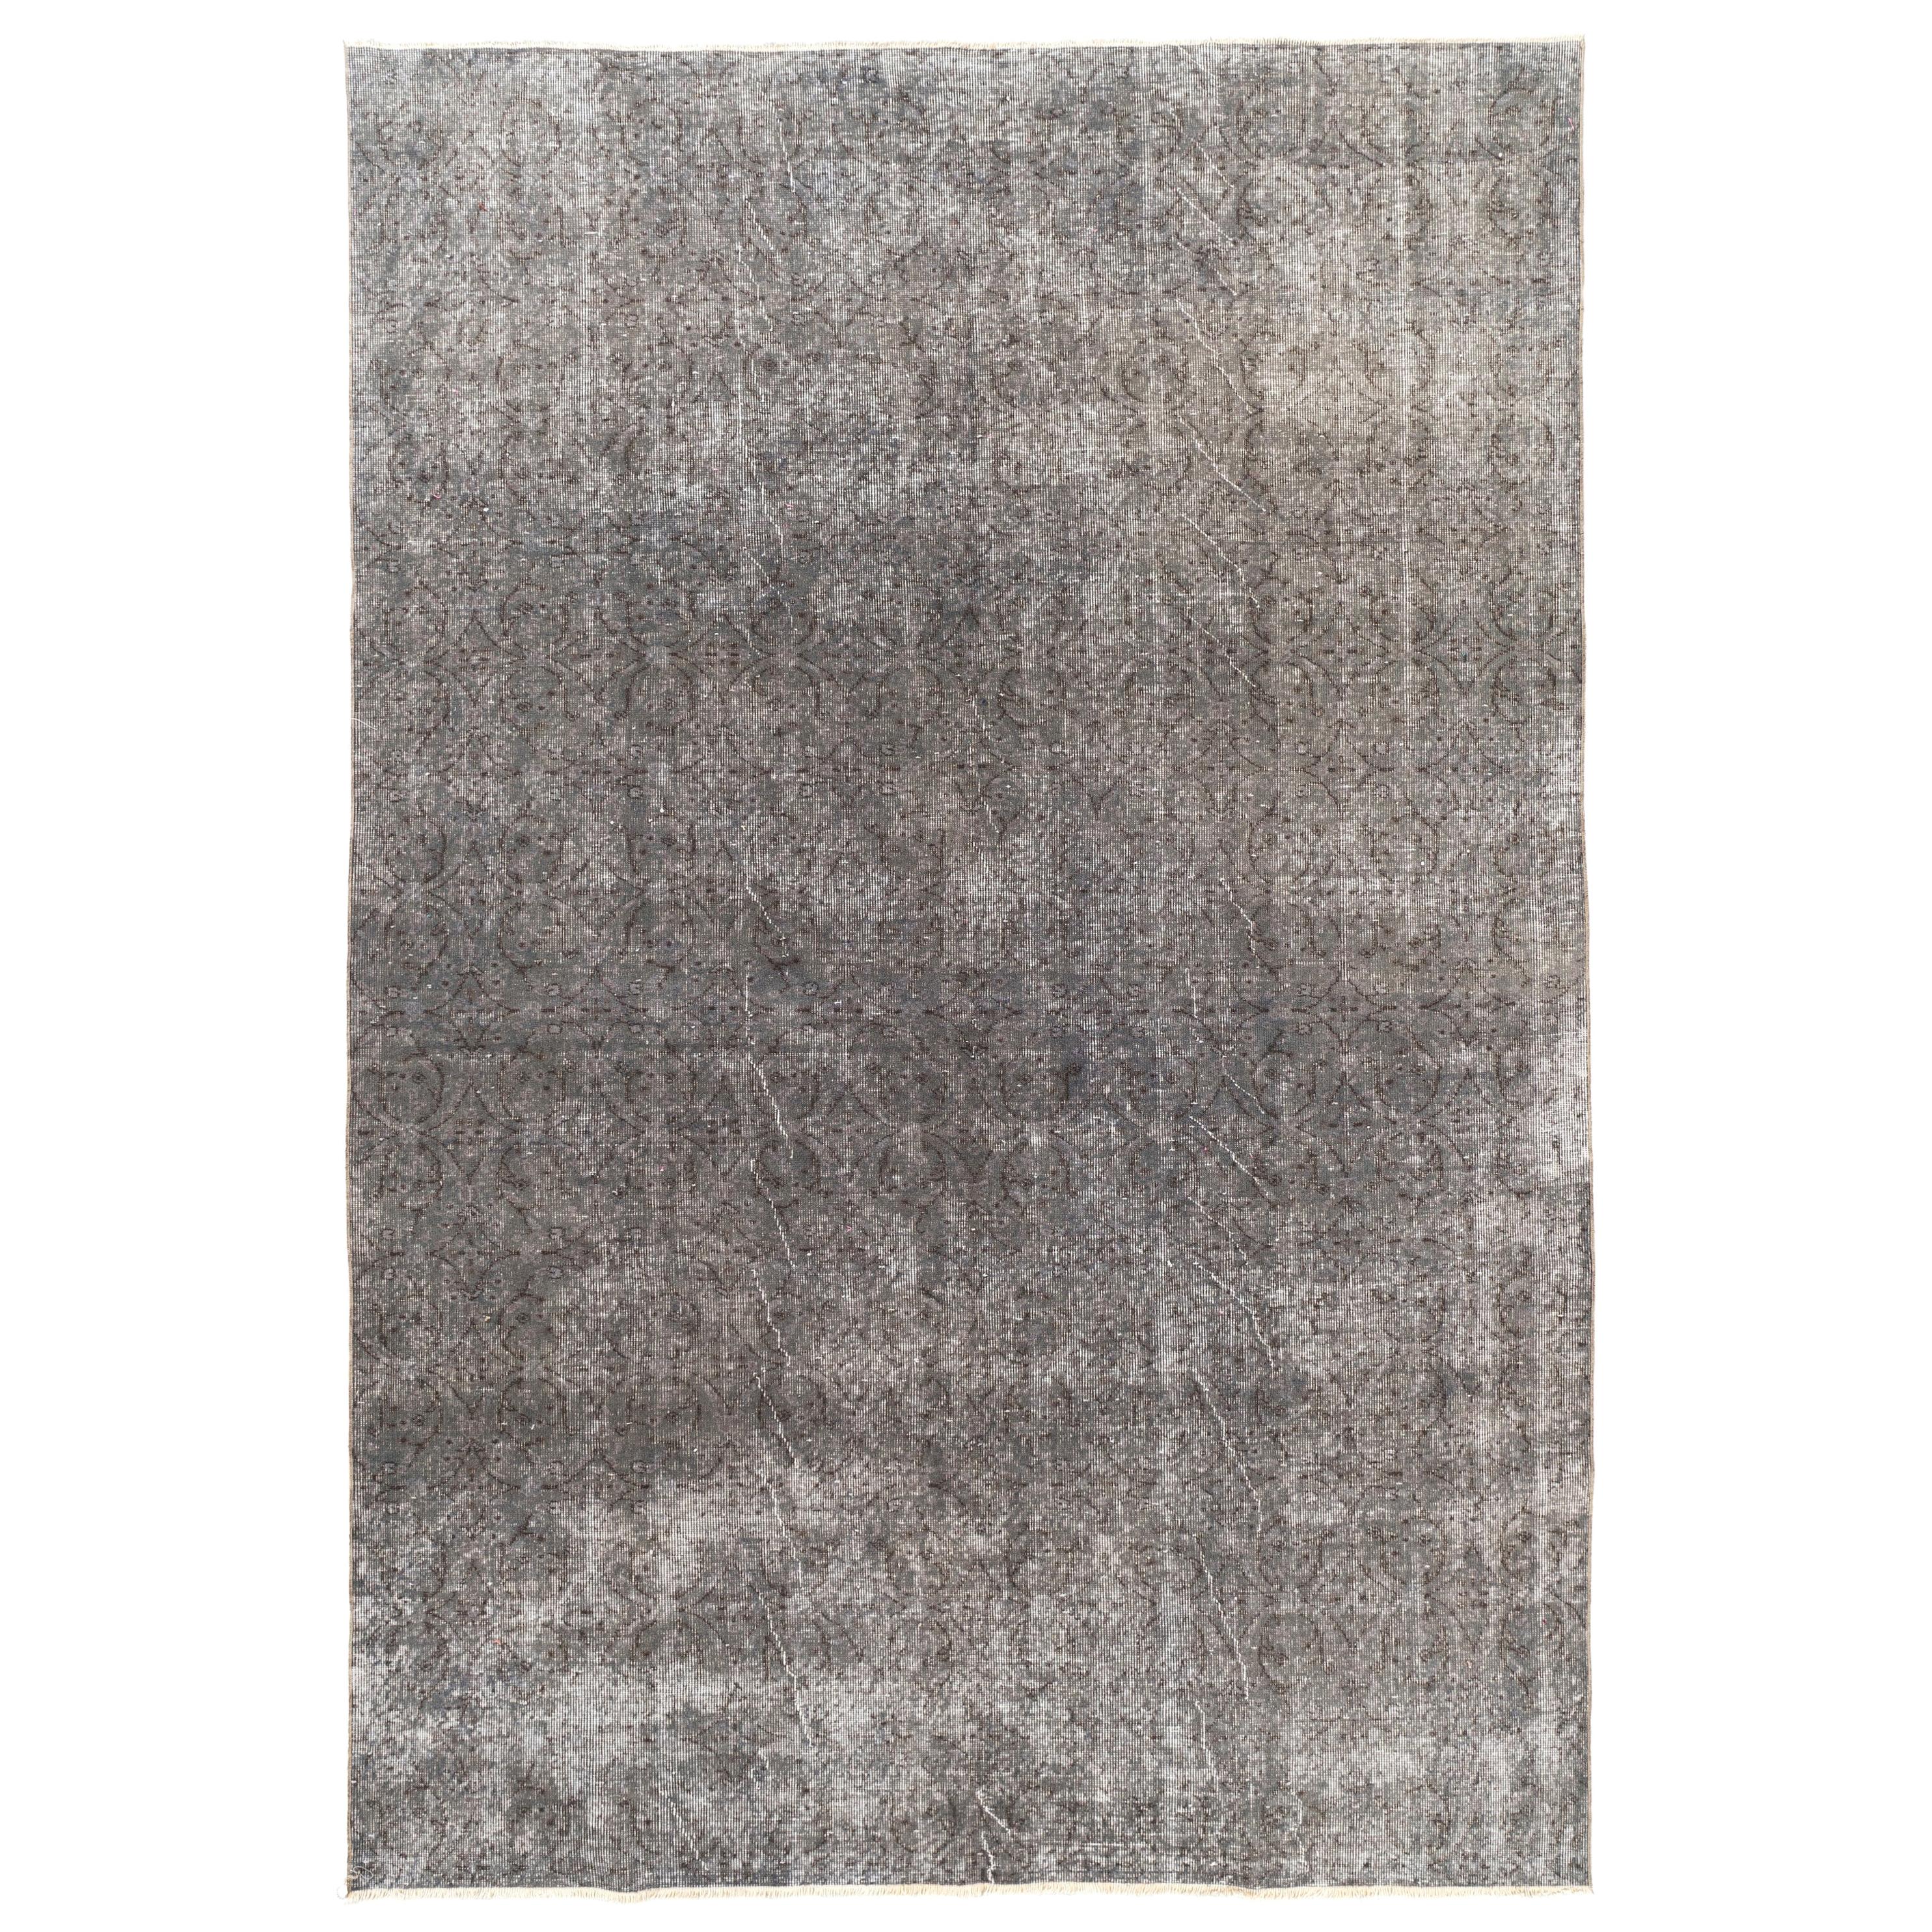 7x10 Ft Turkish Handmade Rug in Gray for Modern Homes, Distressed Vintage Carpet